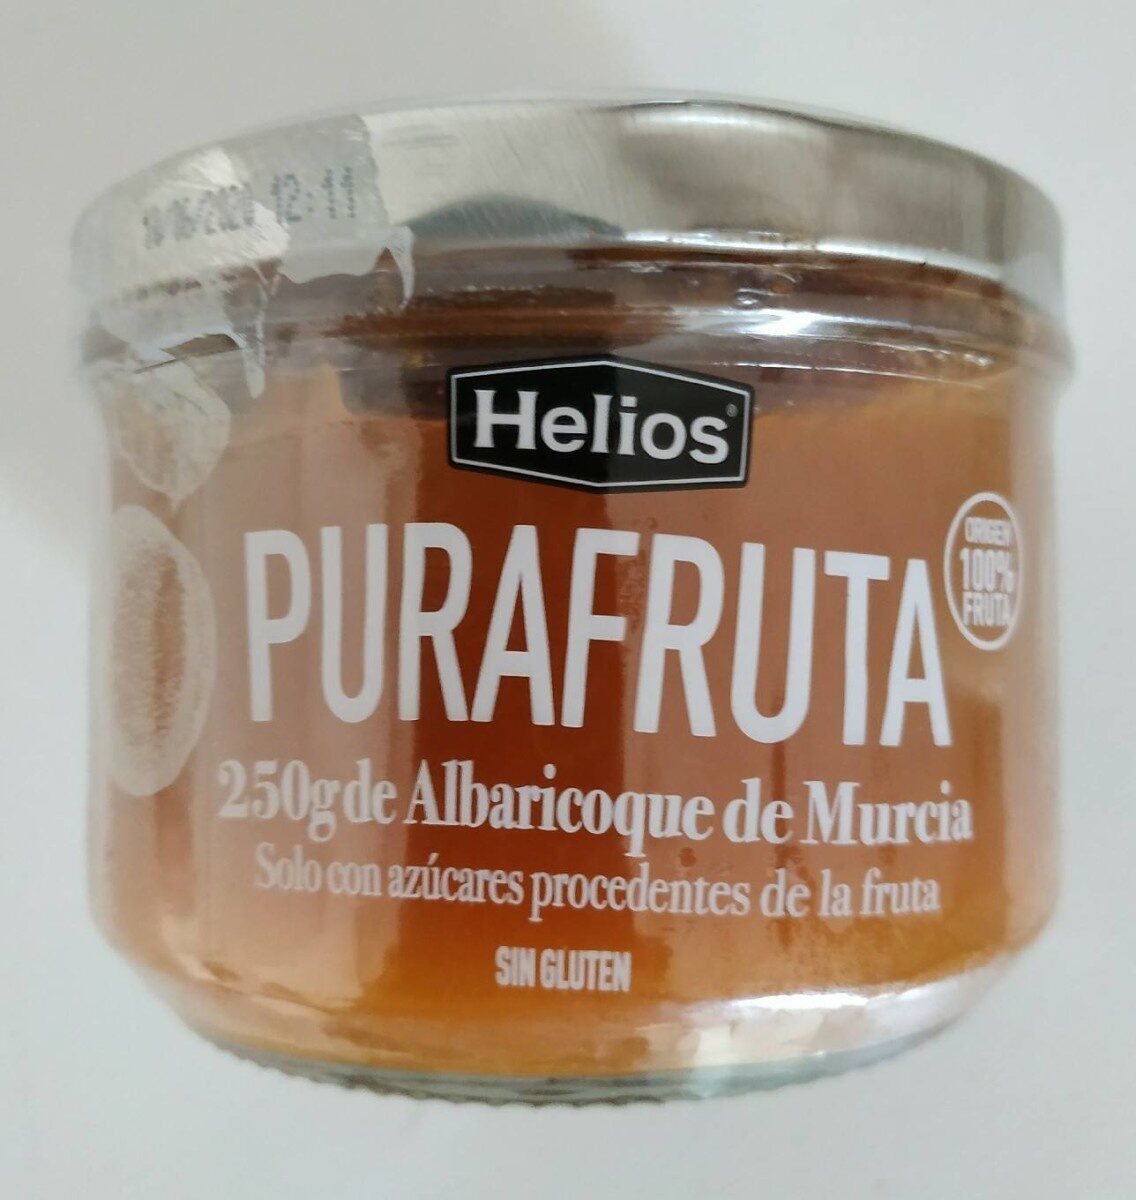 Purafruta mermelada de albaricoque de Murcia - Producto